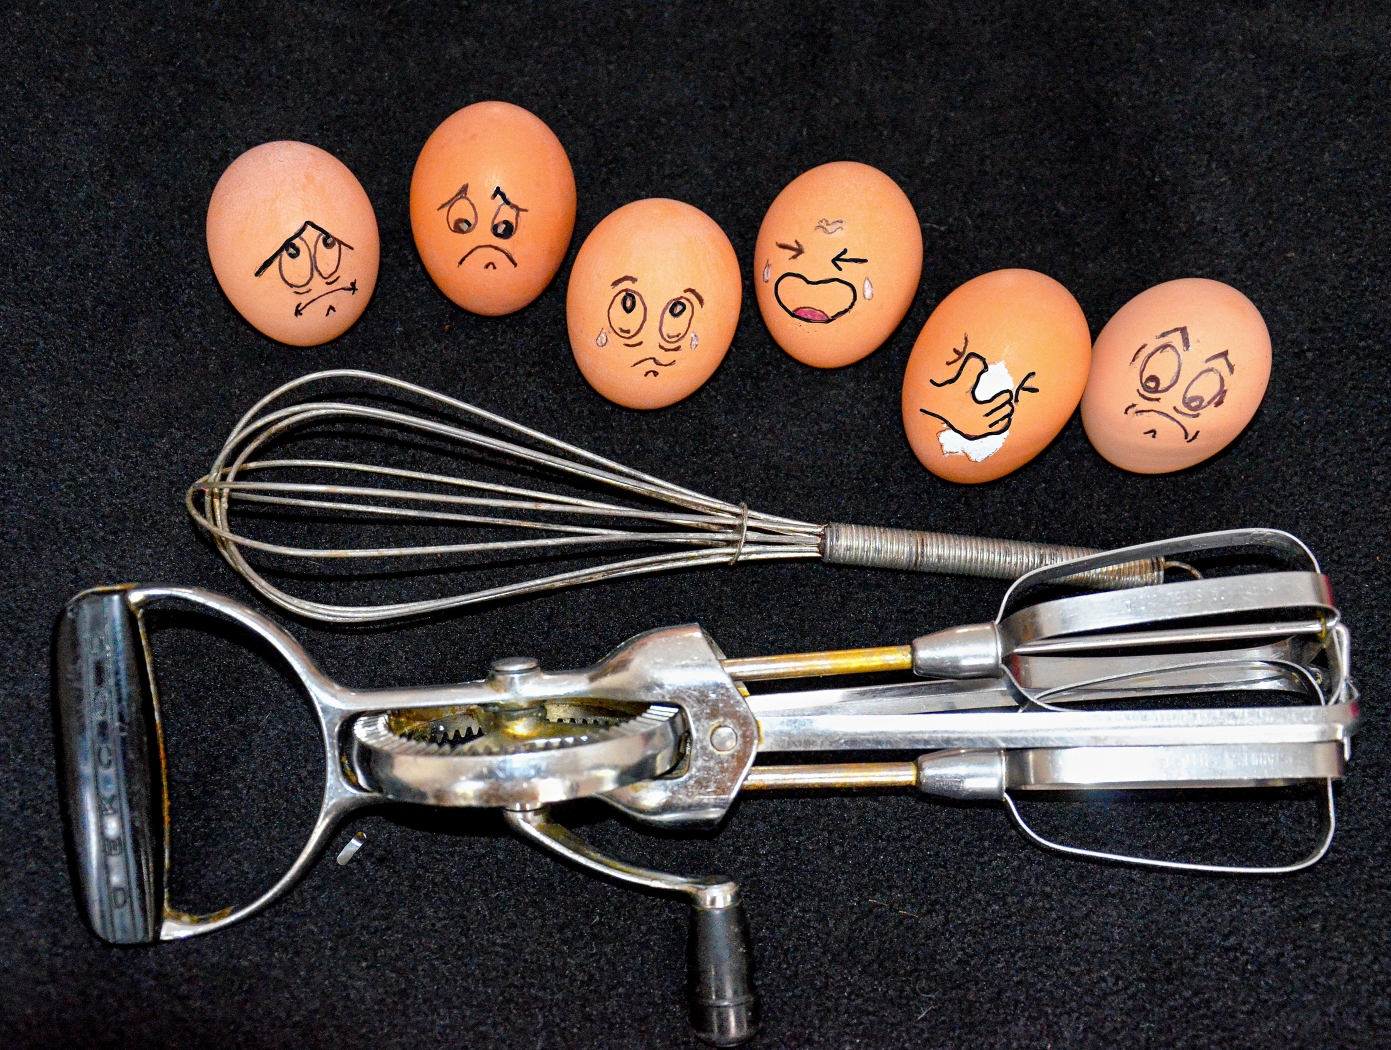 Eggs-istential Threat by Louis Arthur Norton